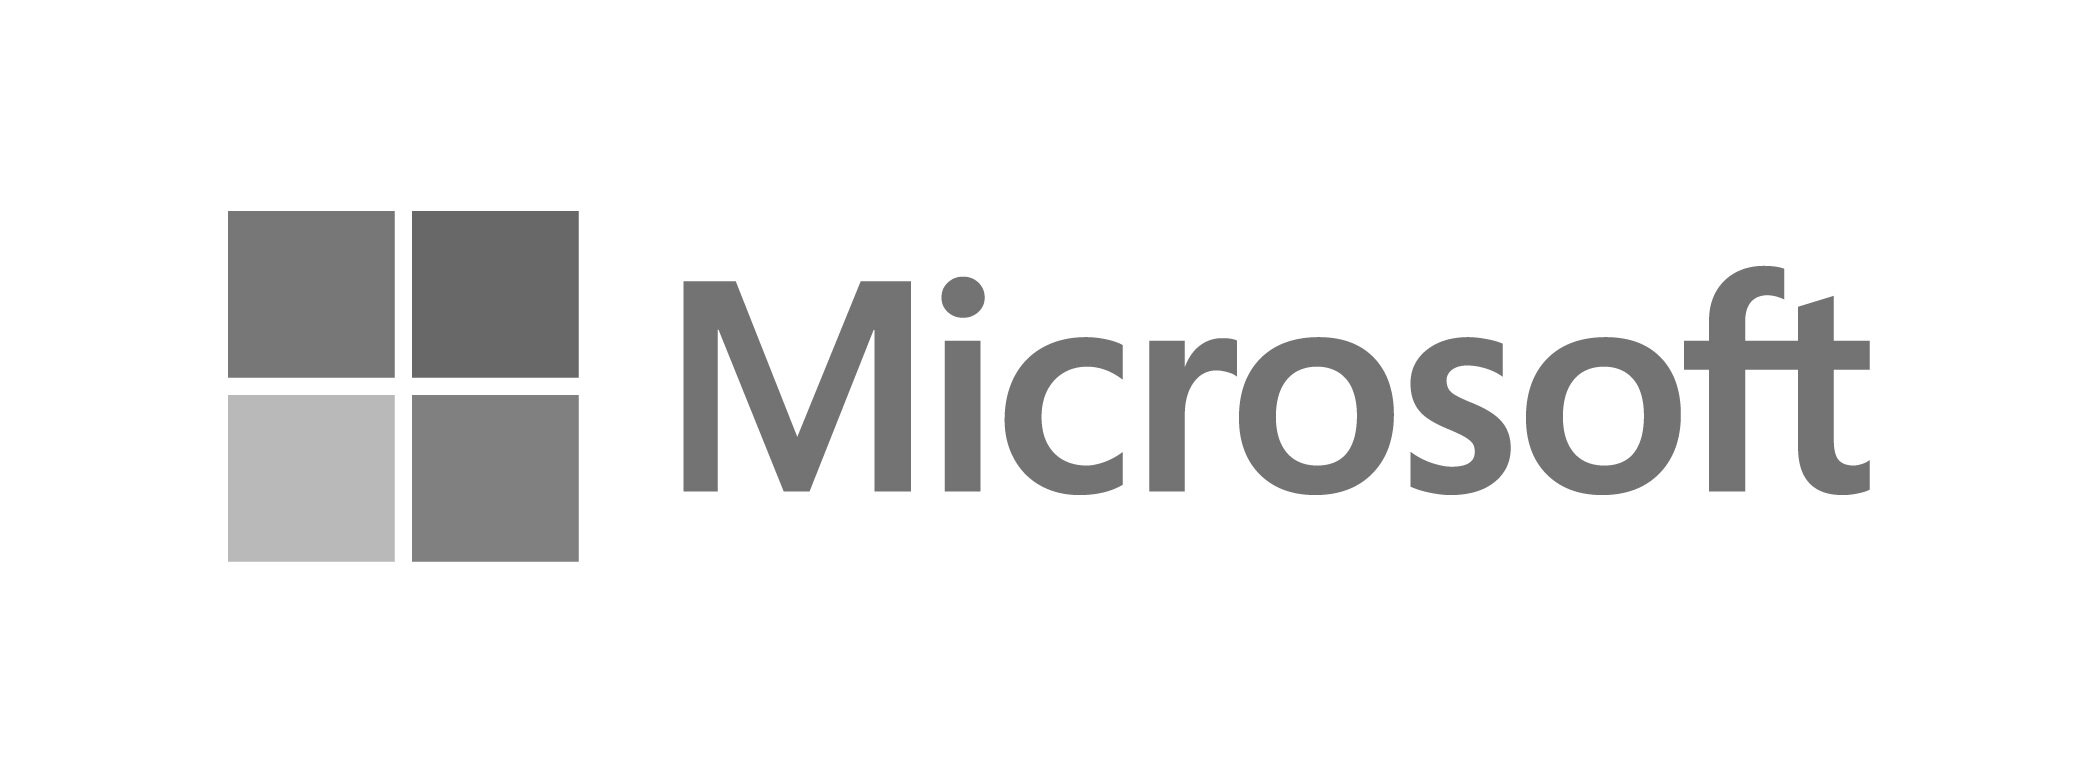 Microsoft_logo_png.png